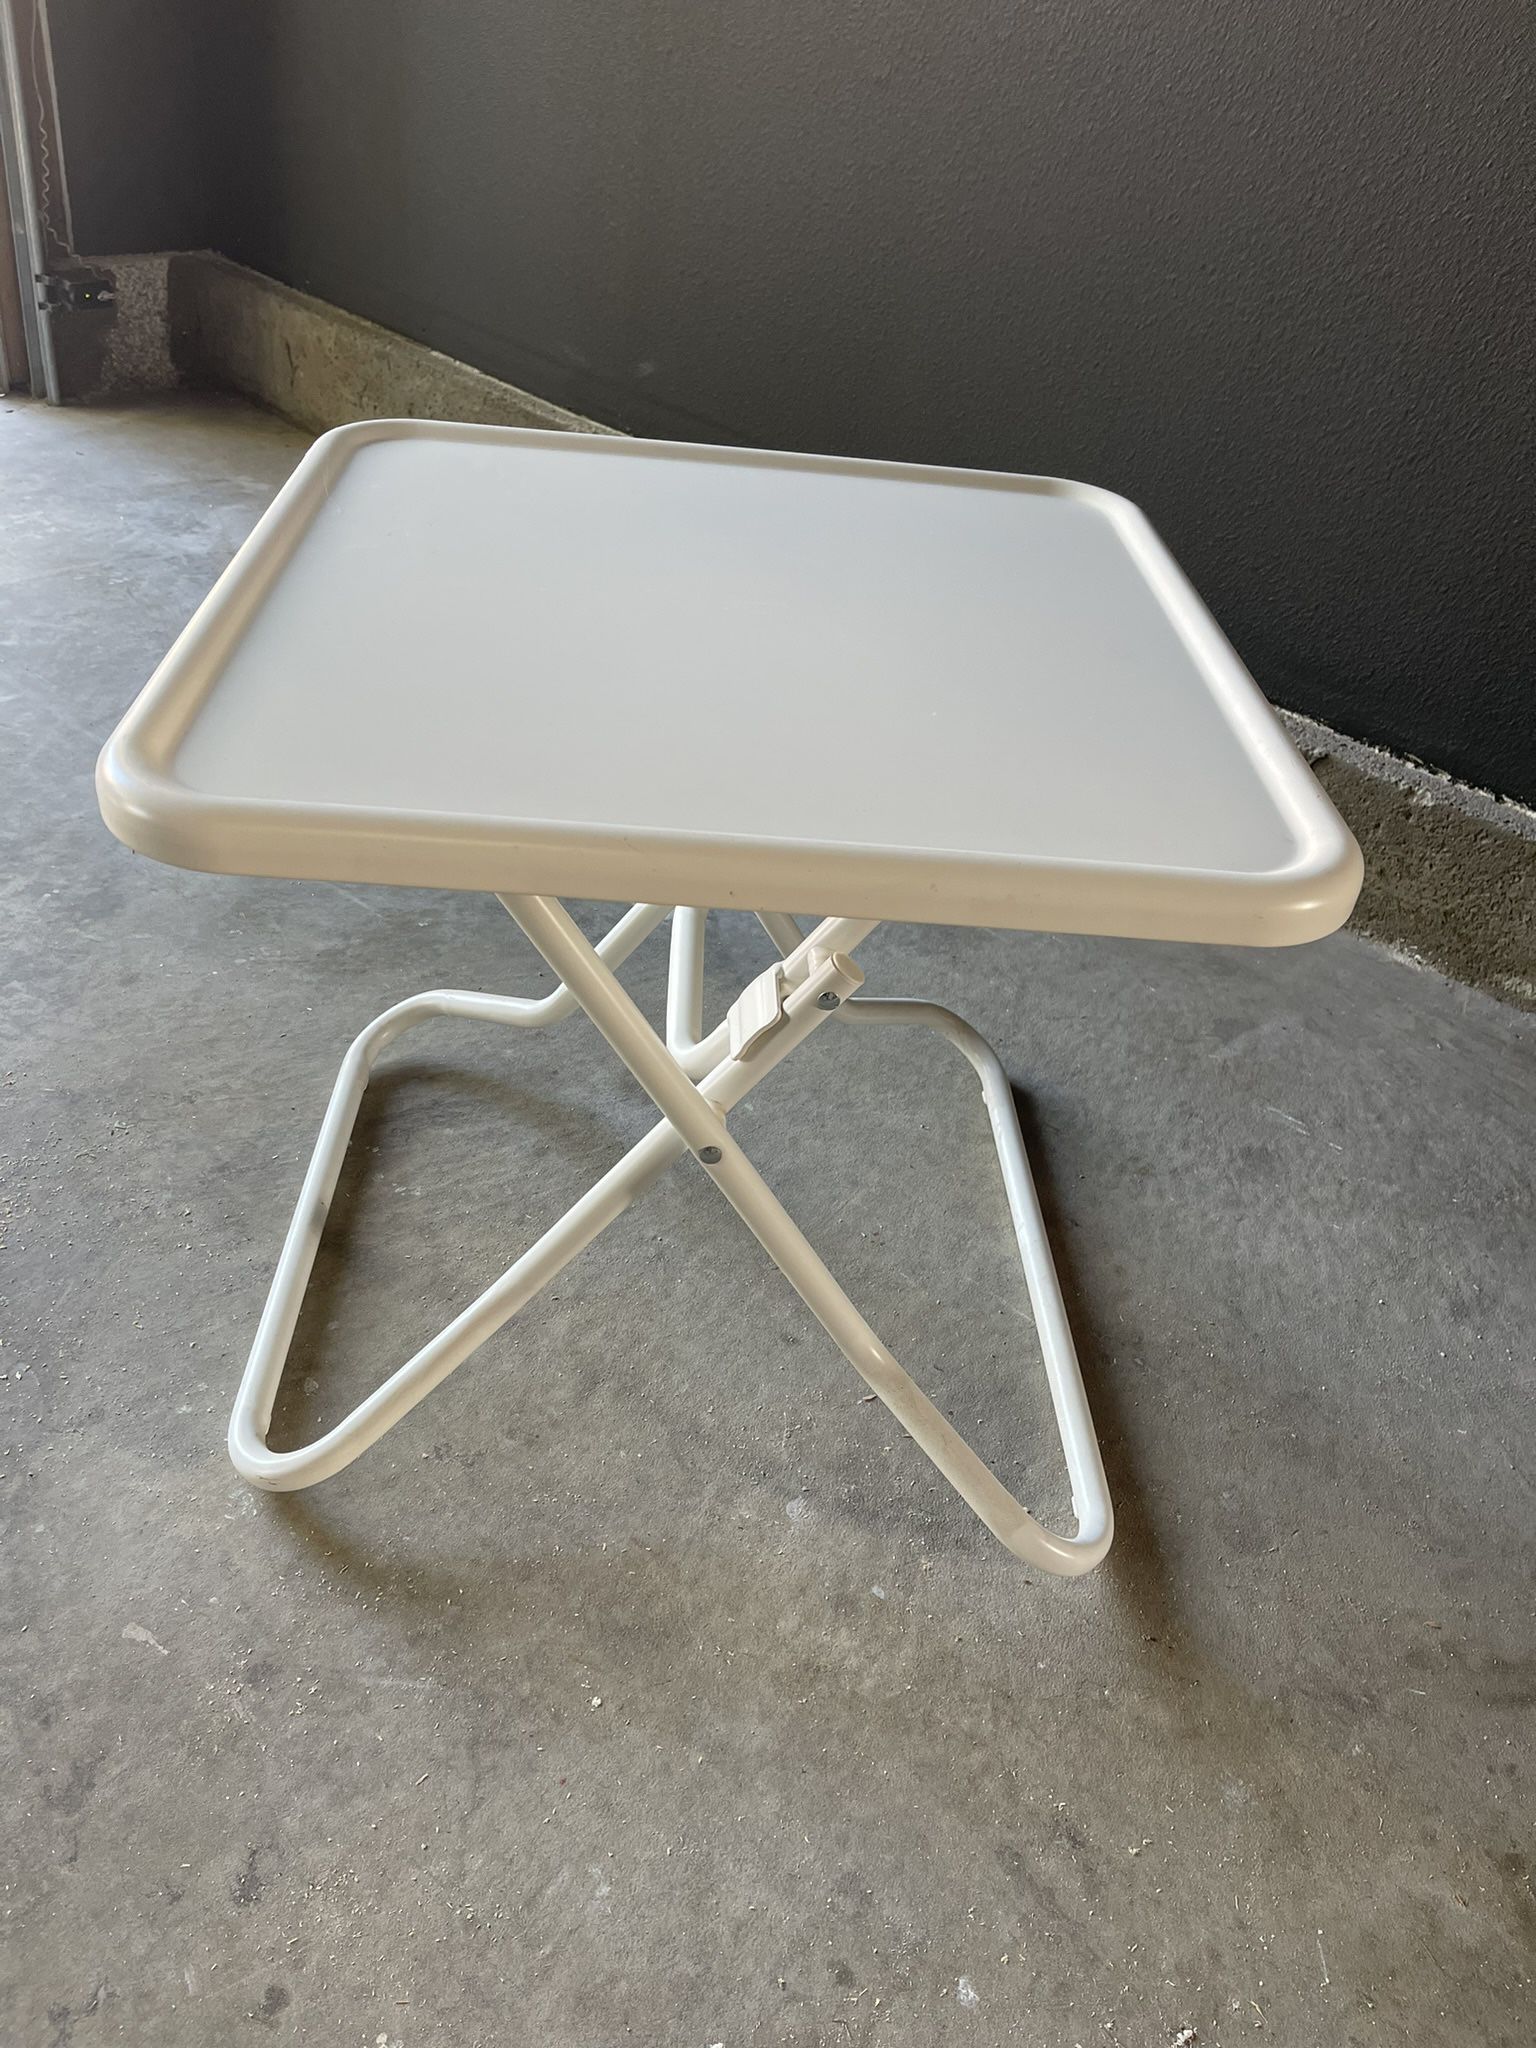 IKEA Foldable Square Table- White